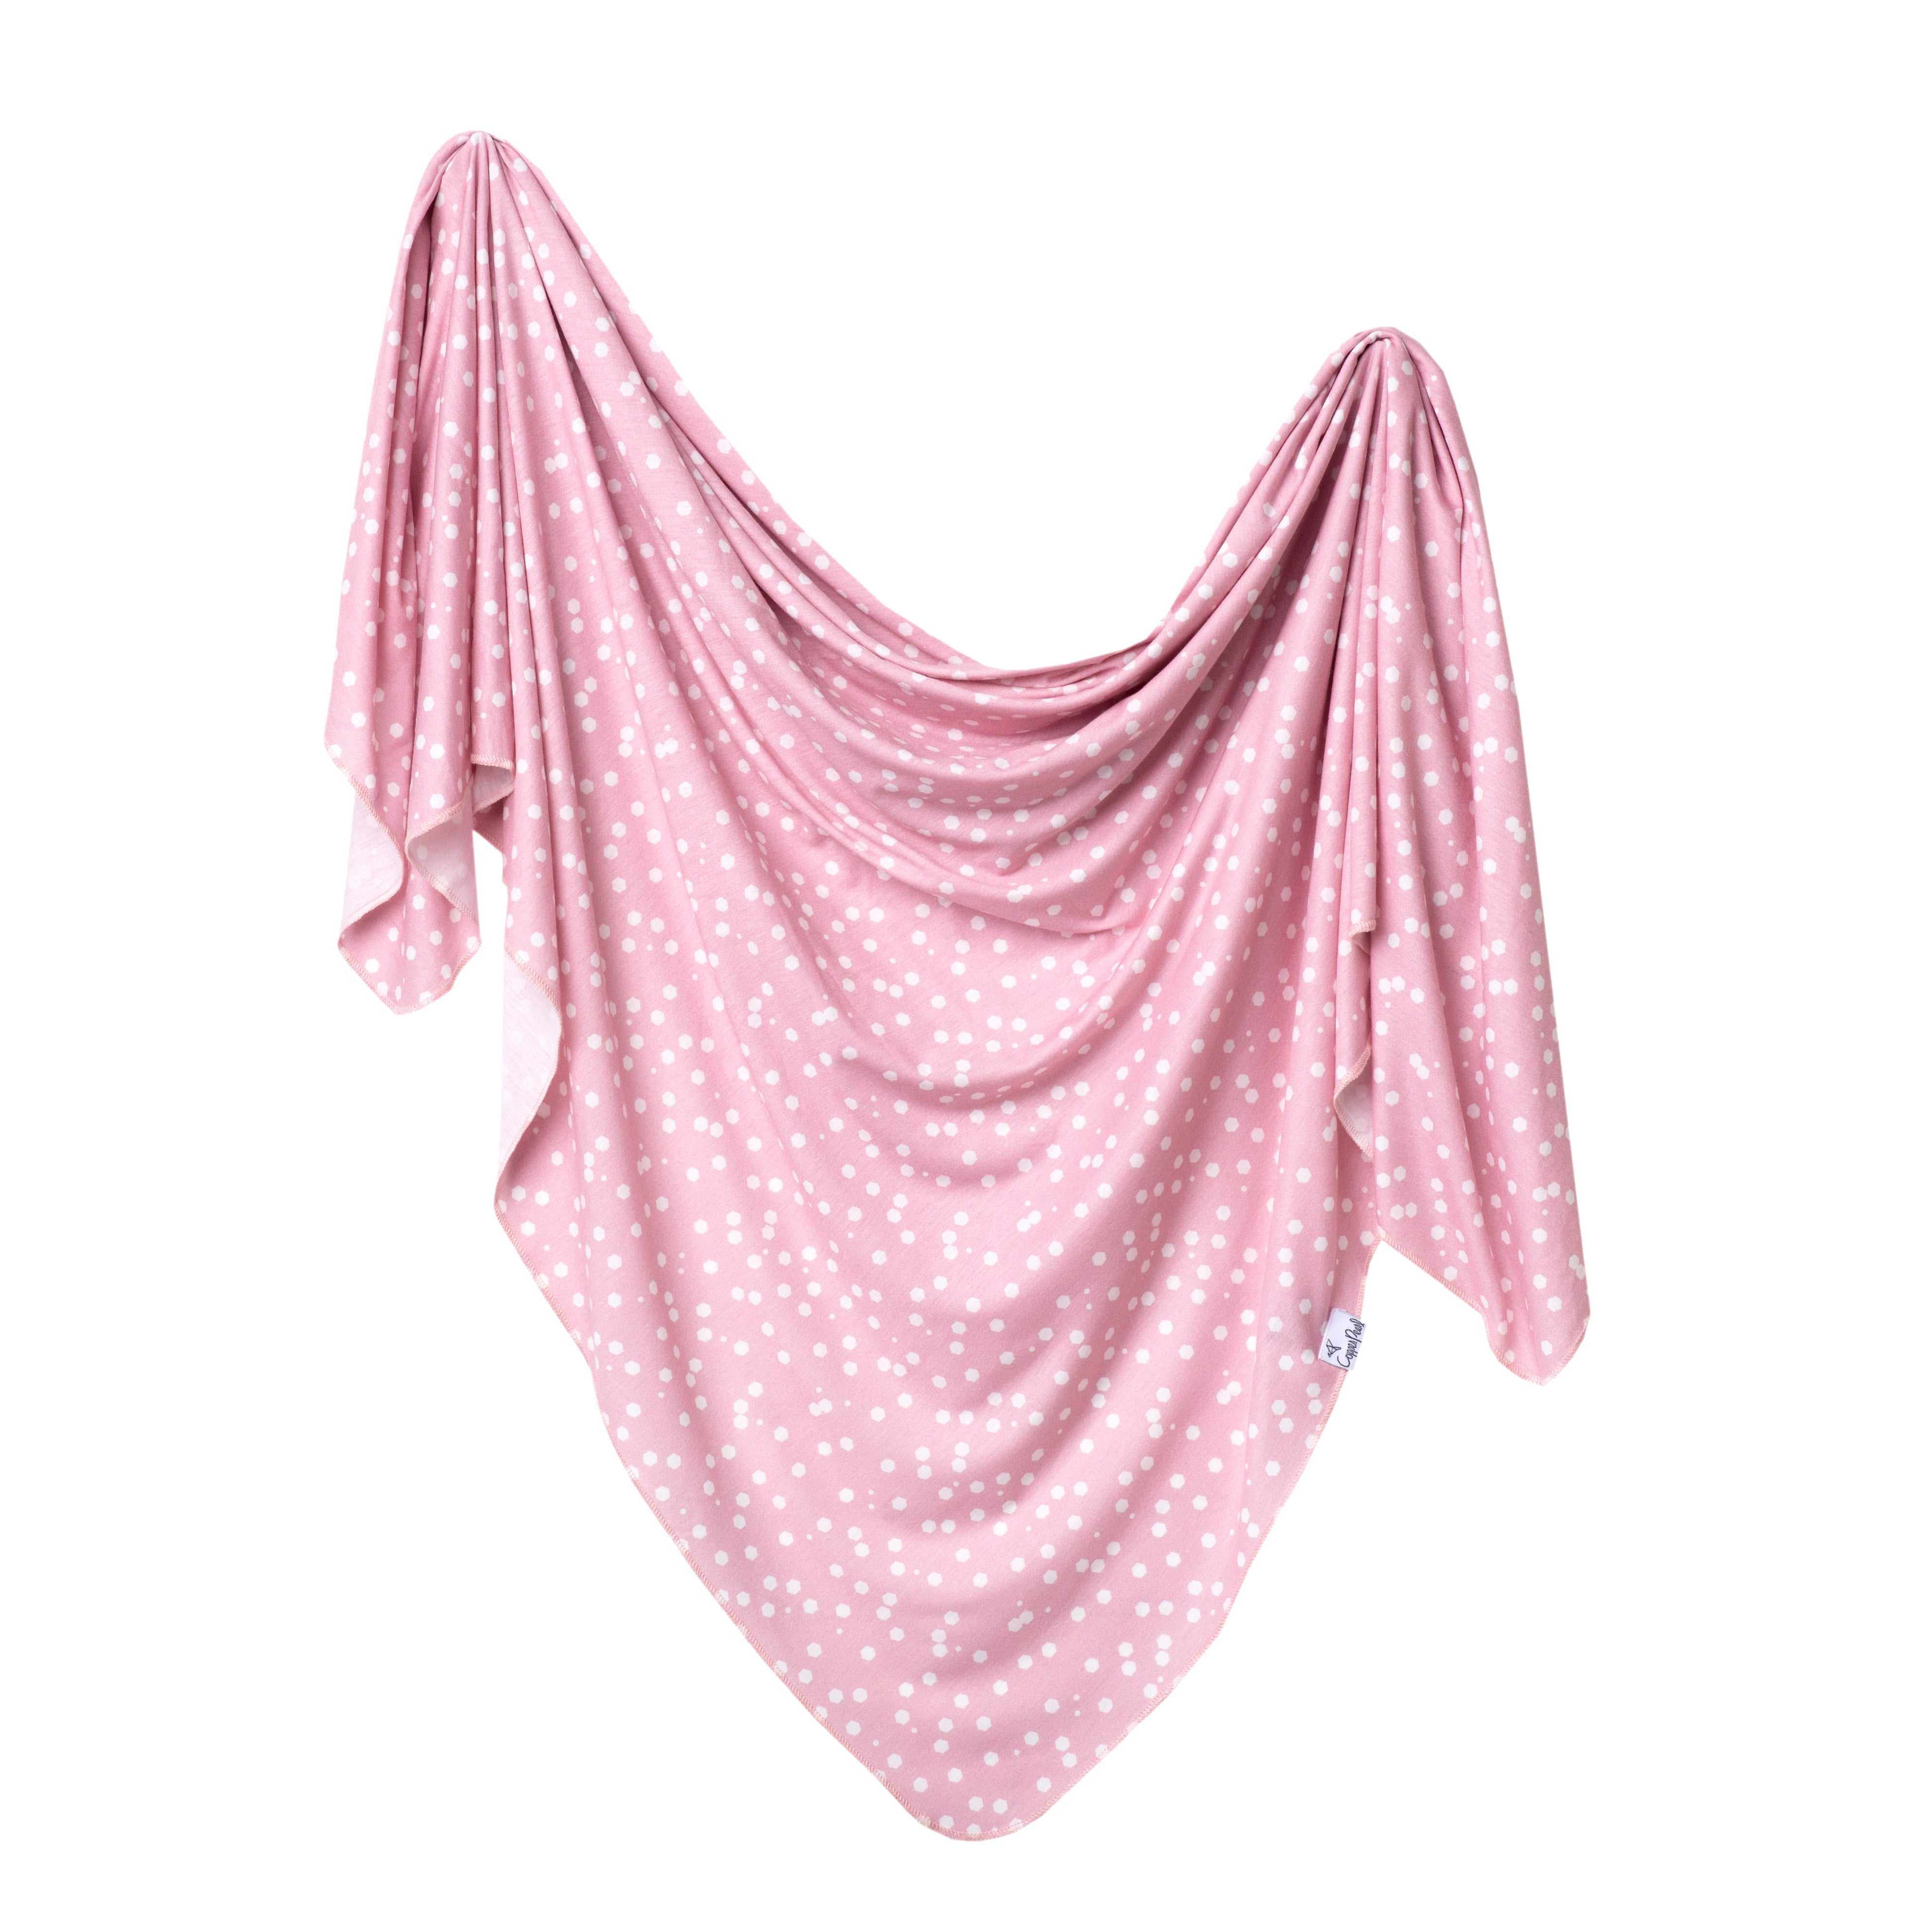 Knit Blanket Swaddle